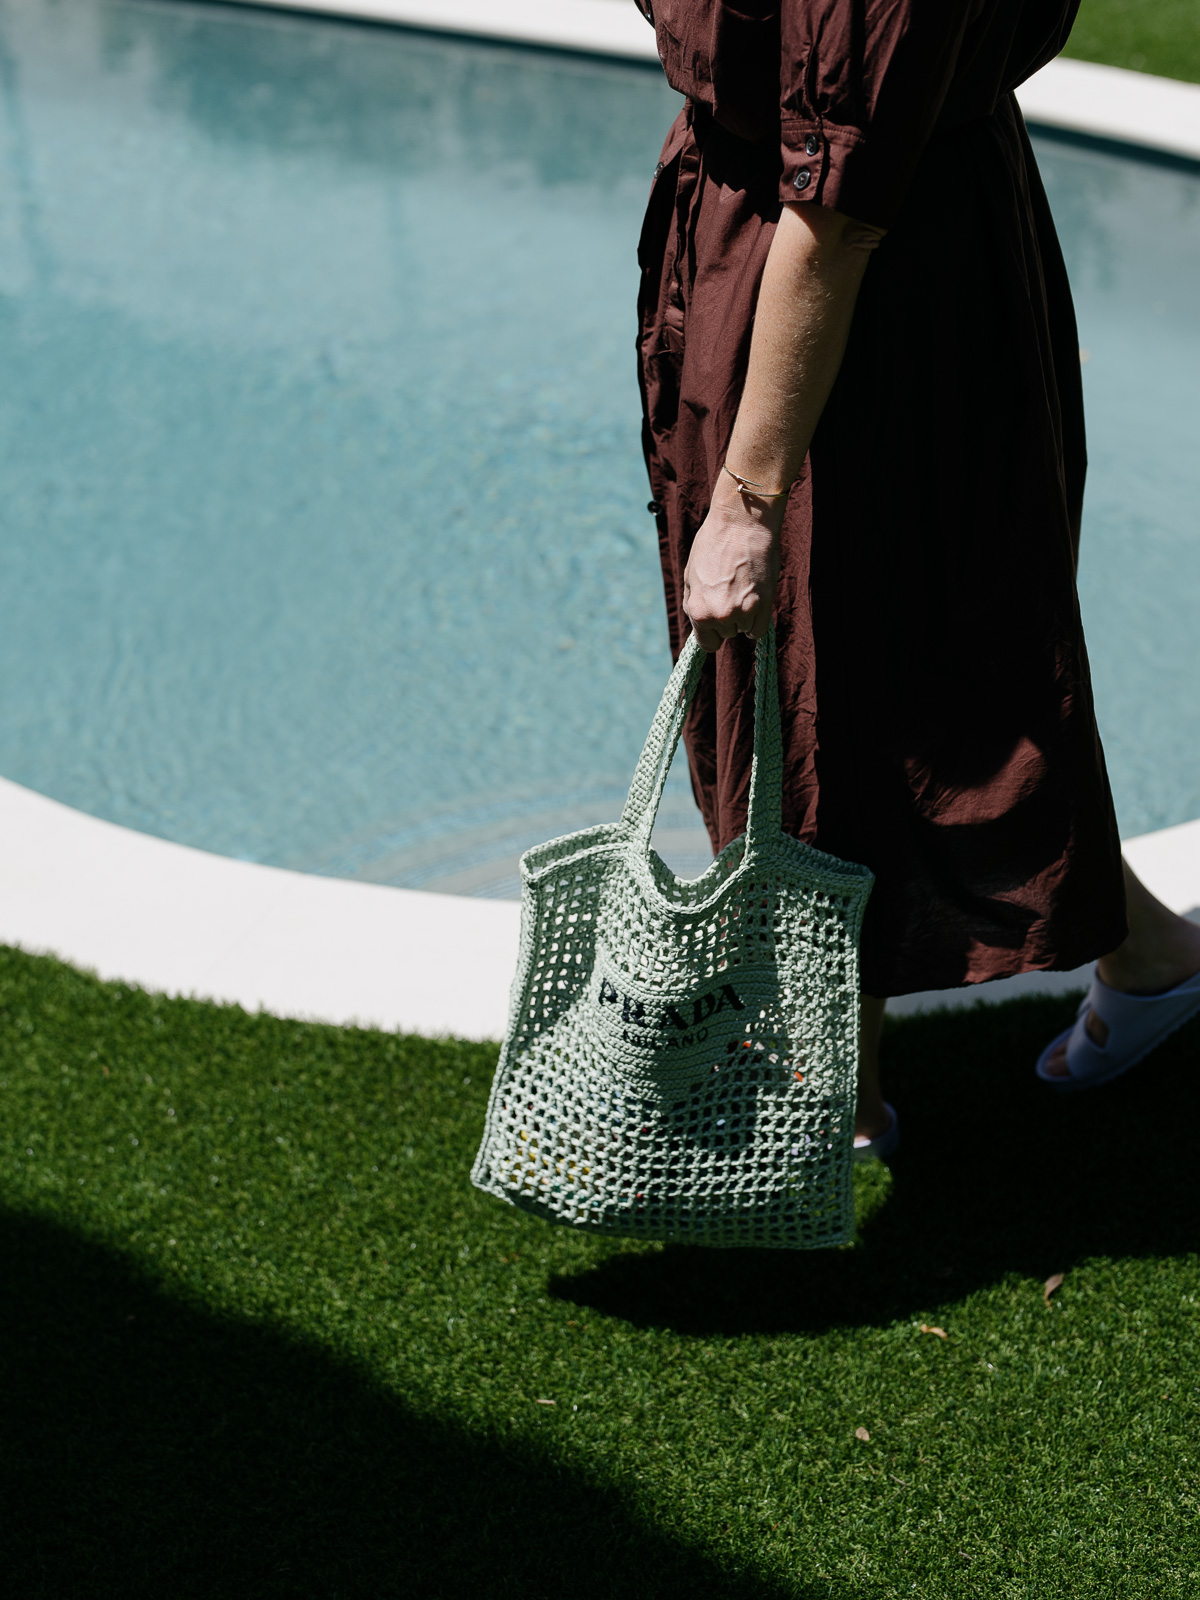 Prada Raffia Tote Bag with Origin Imbued with Summery Mood – EliteLaza